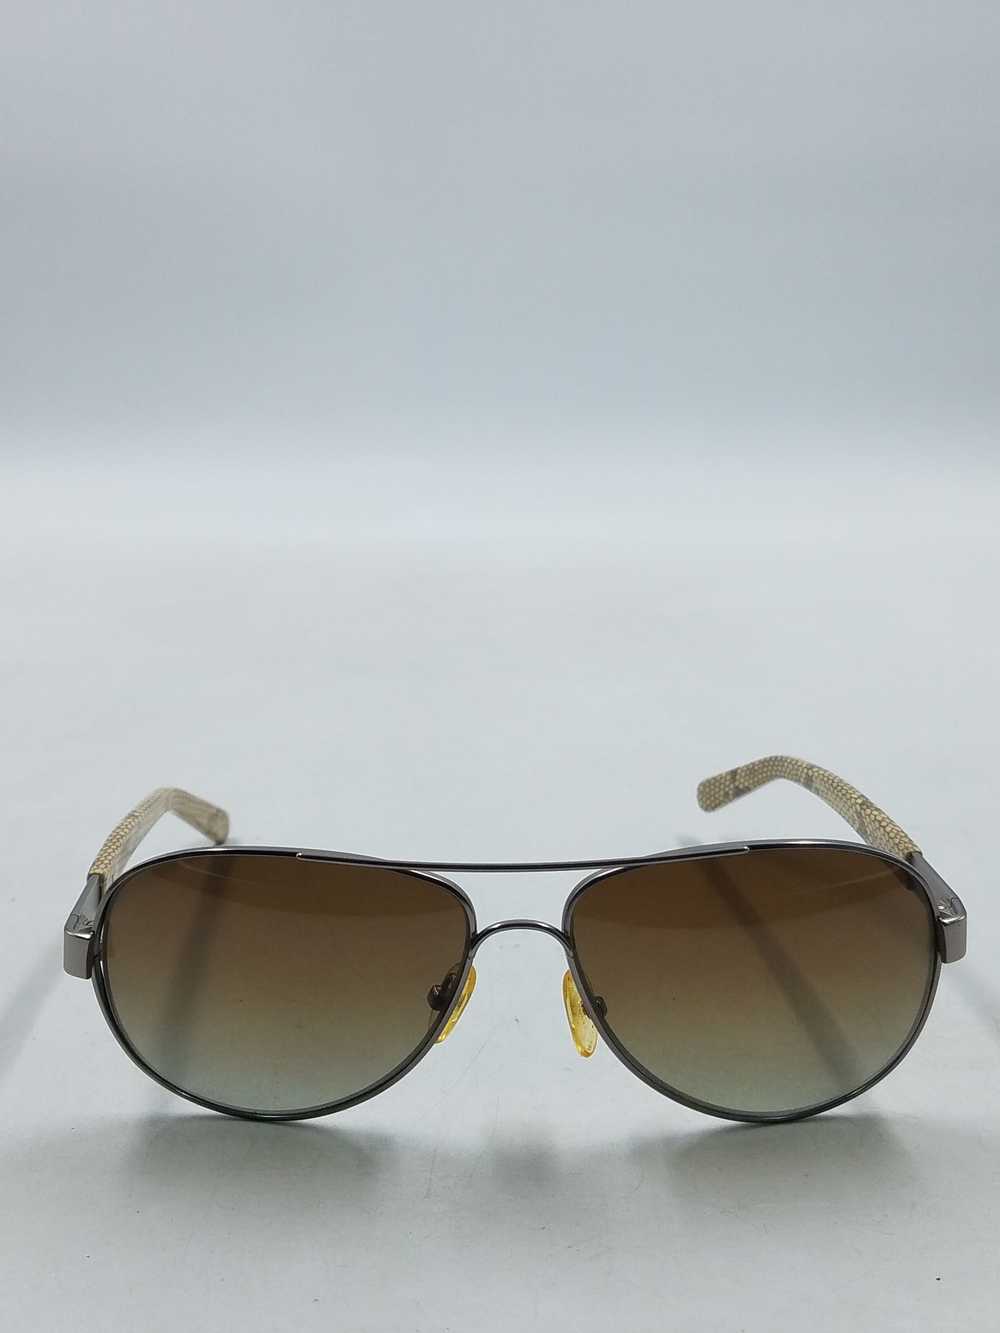 Tory Burch Silver Tinted Aviator Sunglasses - image 2